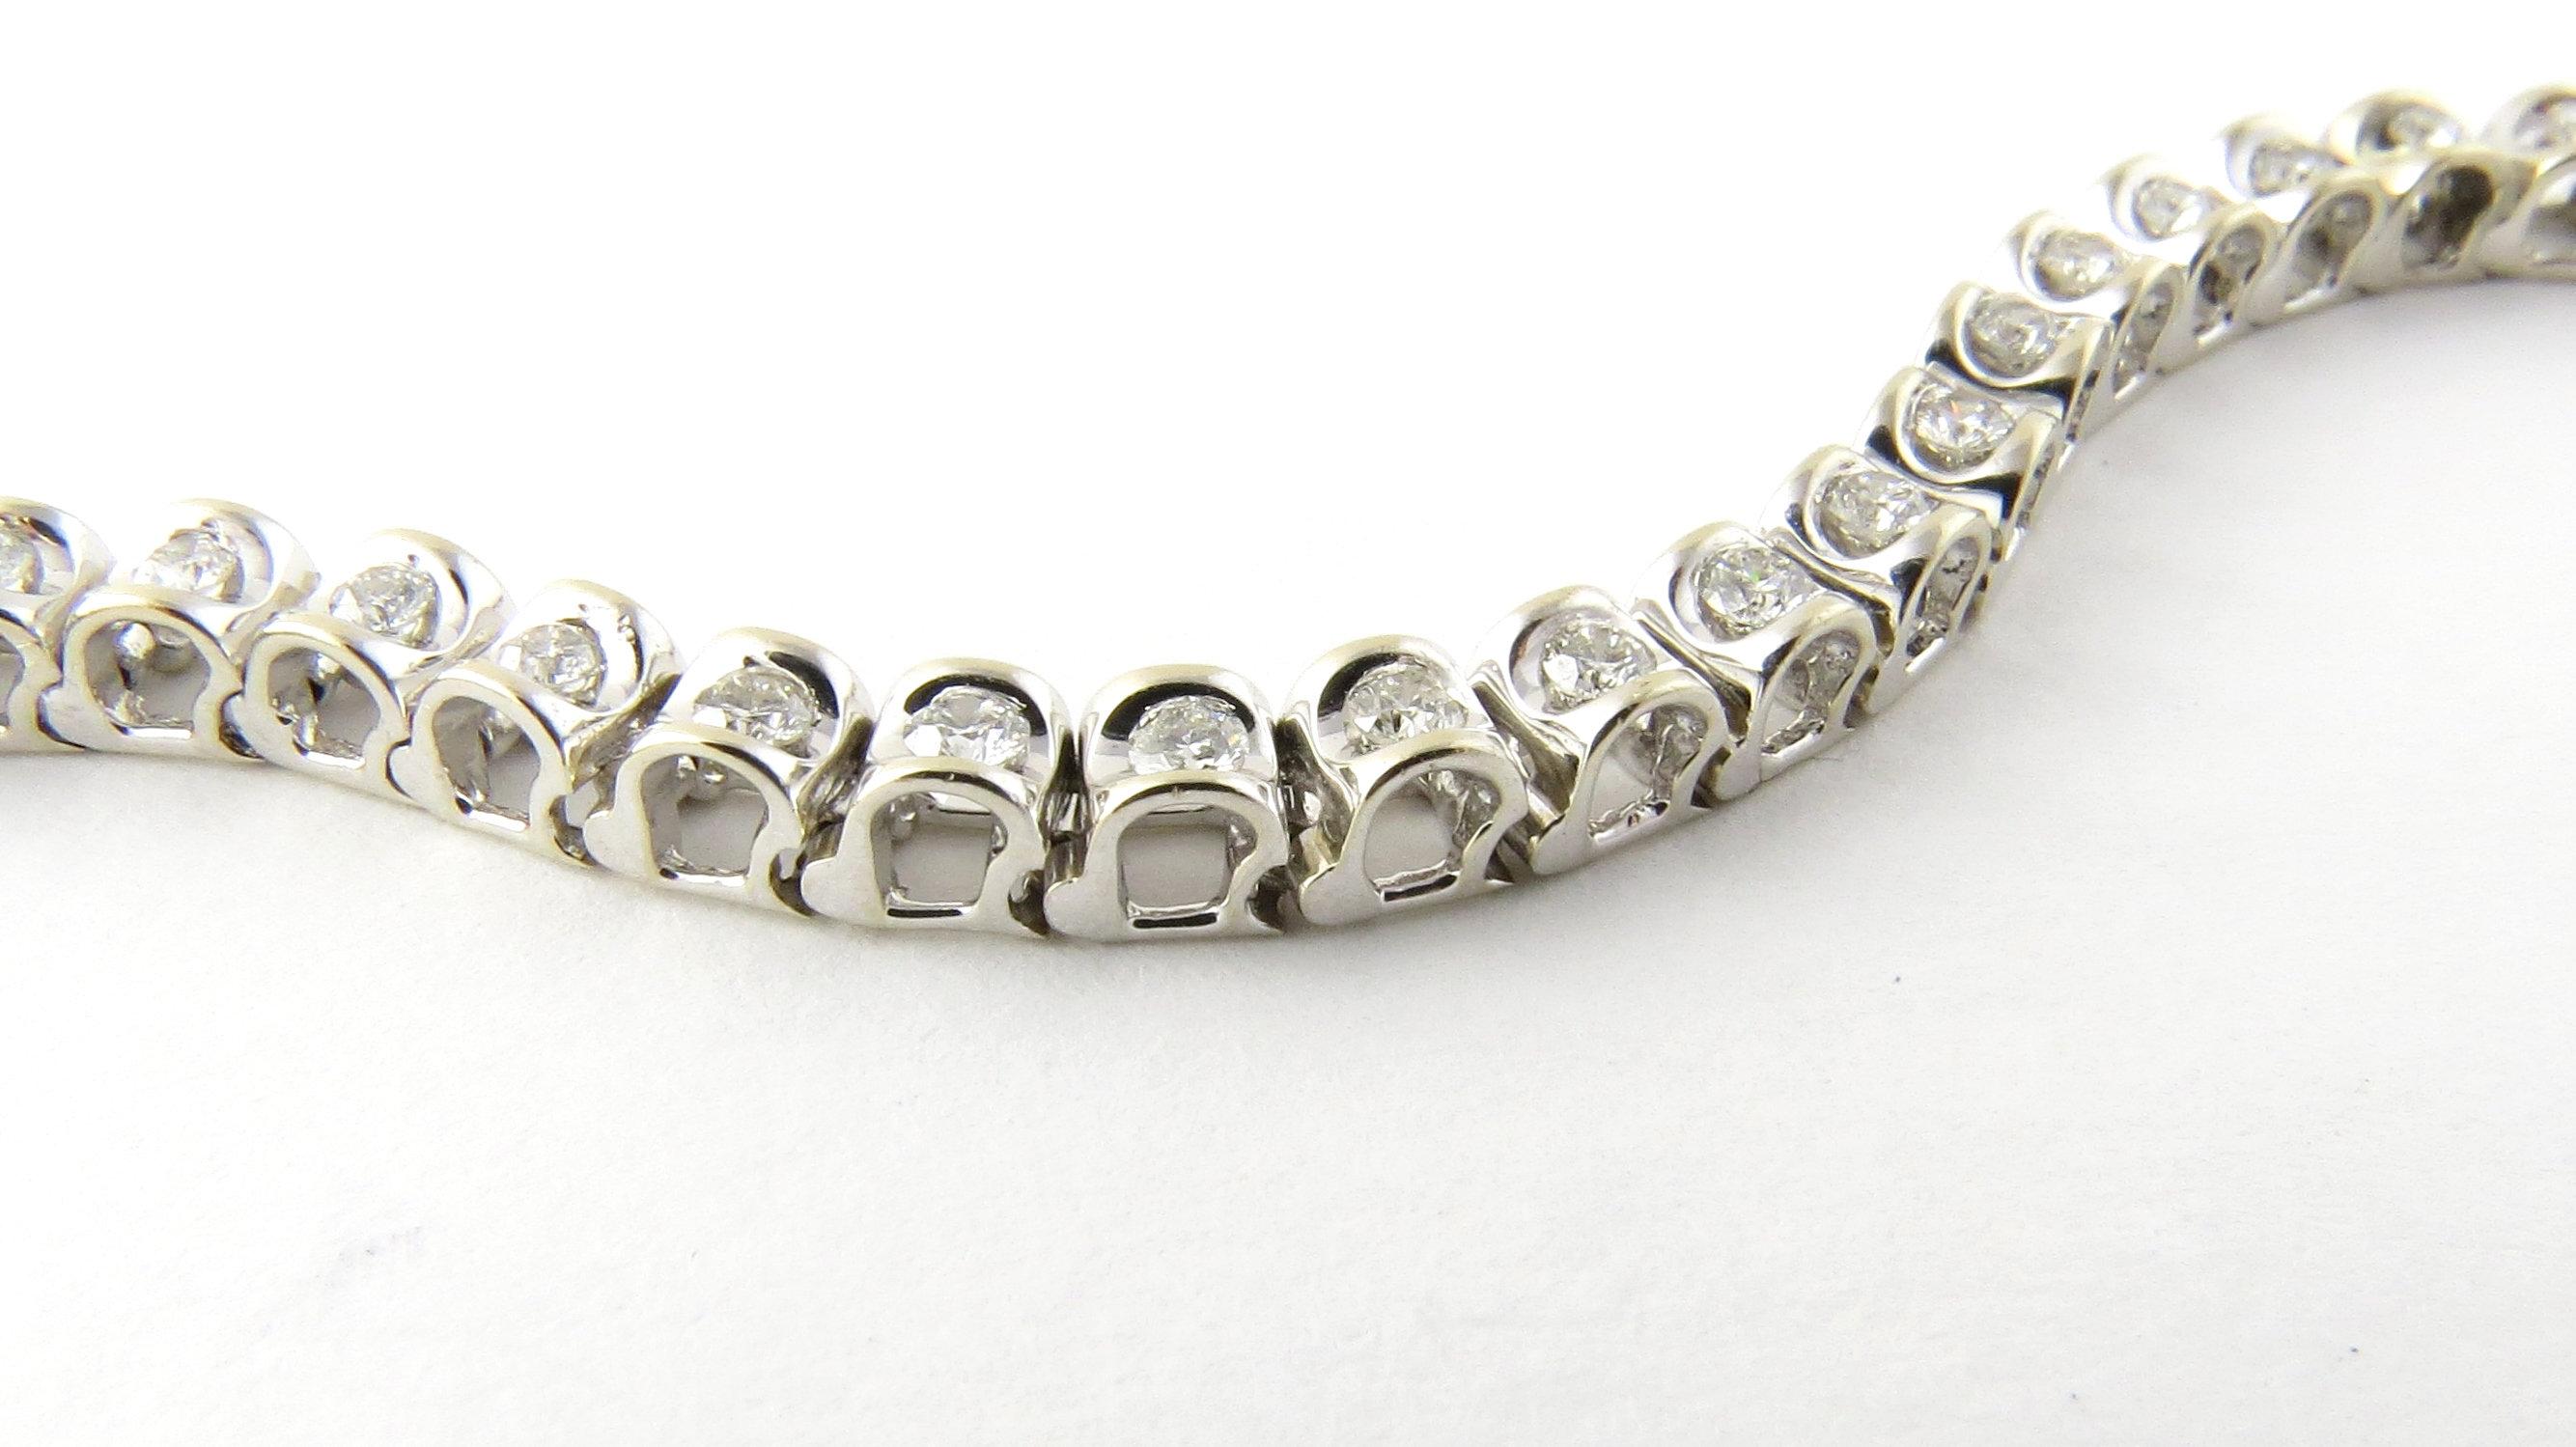 1.5 carat diamond tennis bracelet